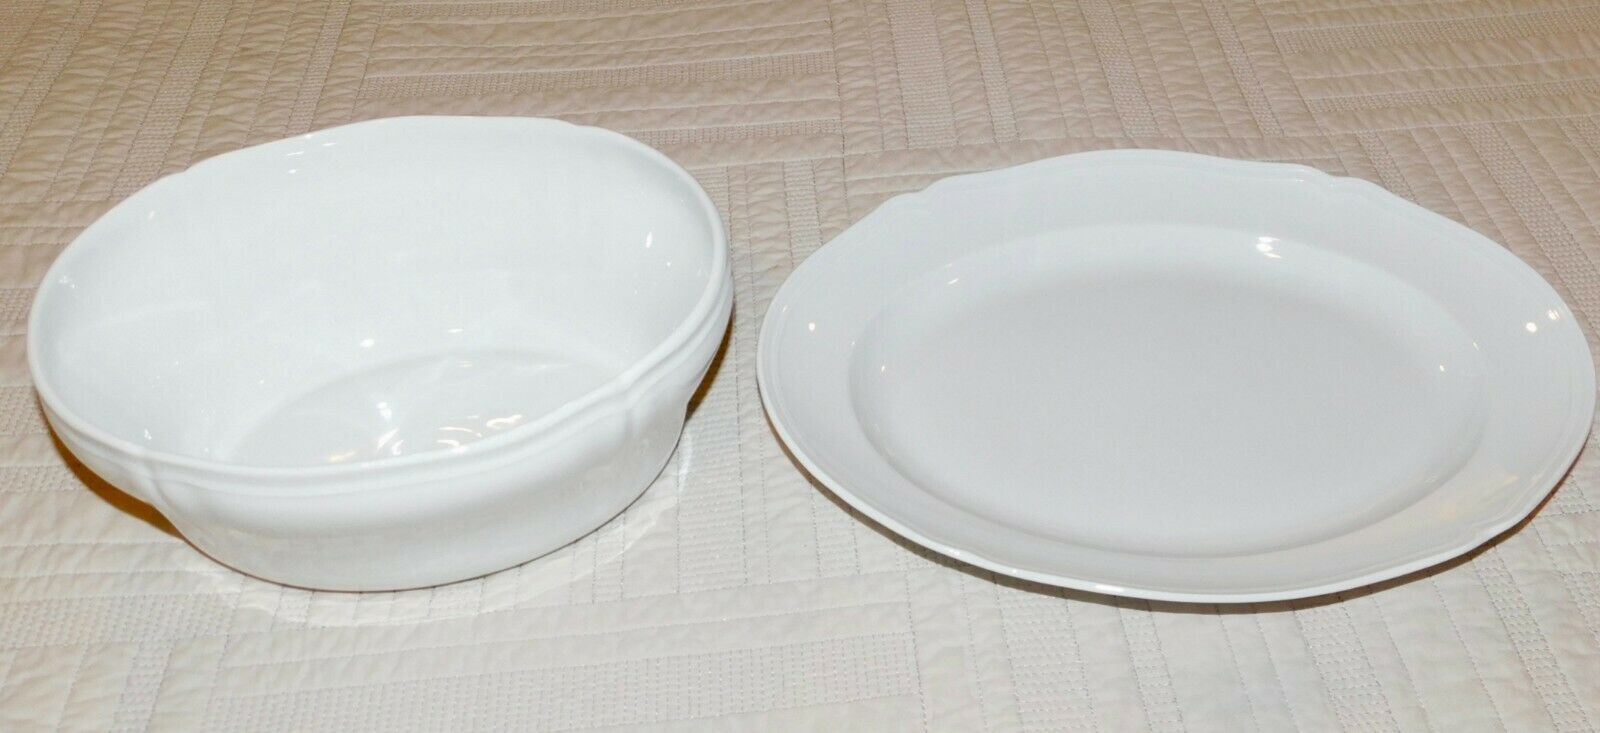 New Richard Ginori Italy Antico Doccia White Oval Serving Platter &bowl Dish Set